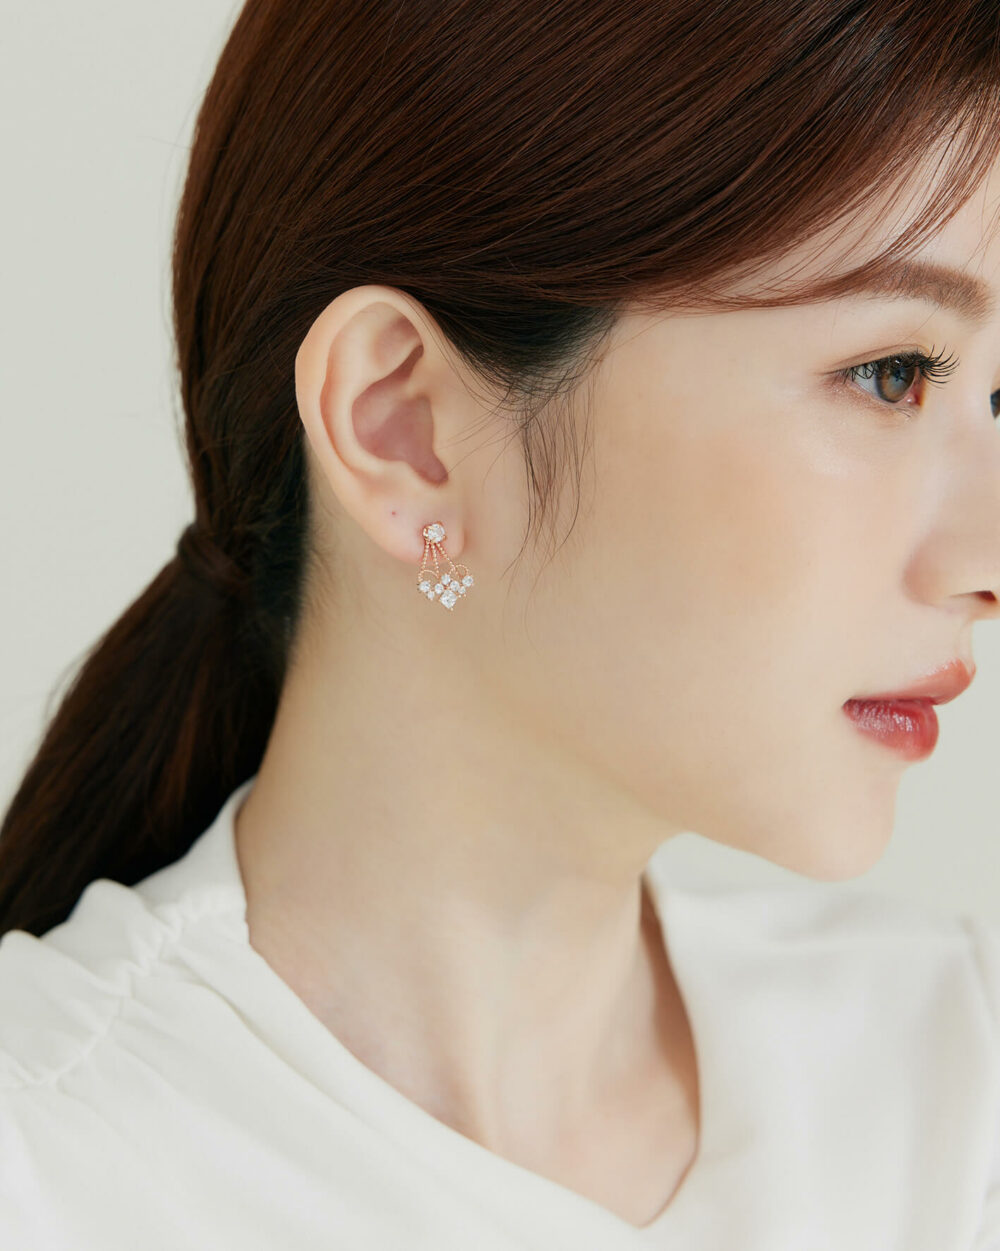 Eco安珂,韓國飾品,韓國耳環,耳針式耳環,氣質耳環,鑽耳環,玫瑰金耳環,婚宴耳環